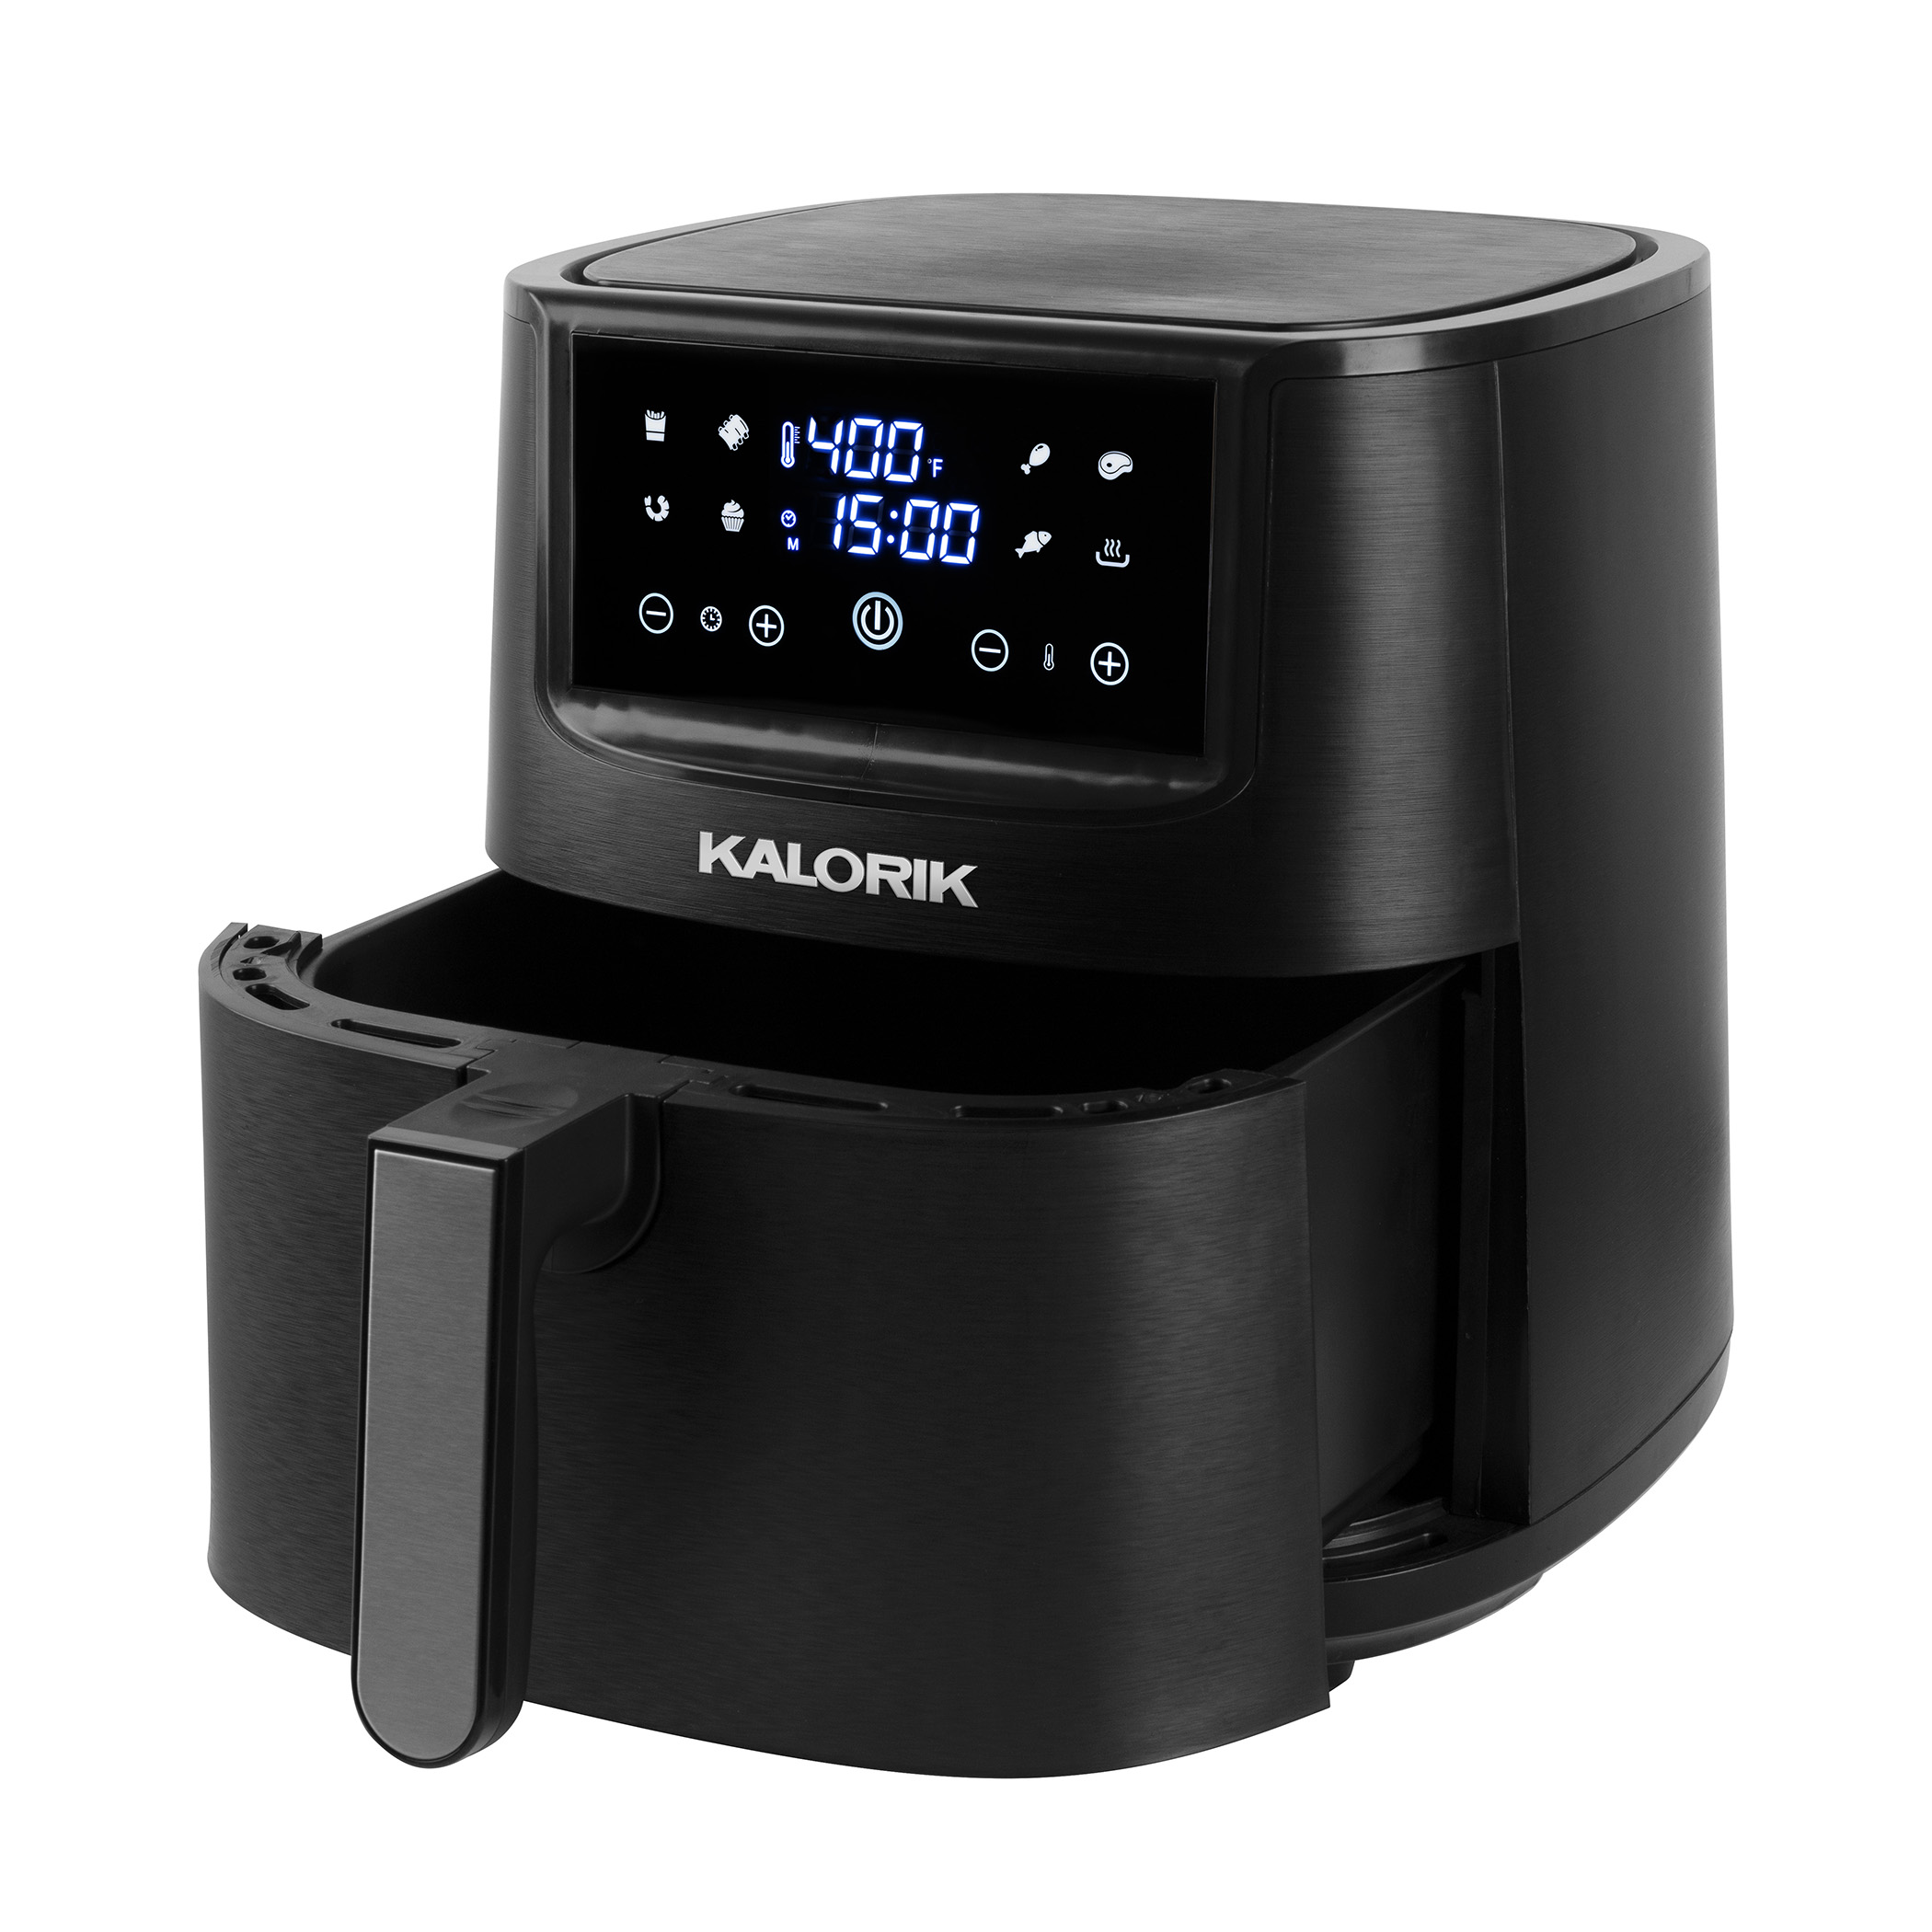 Kalorik® 8 Qt Digital Touchscreen Air Fryer with Trivet, Black FT 51503 BK - image 5 of 10